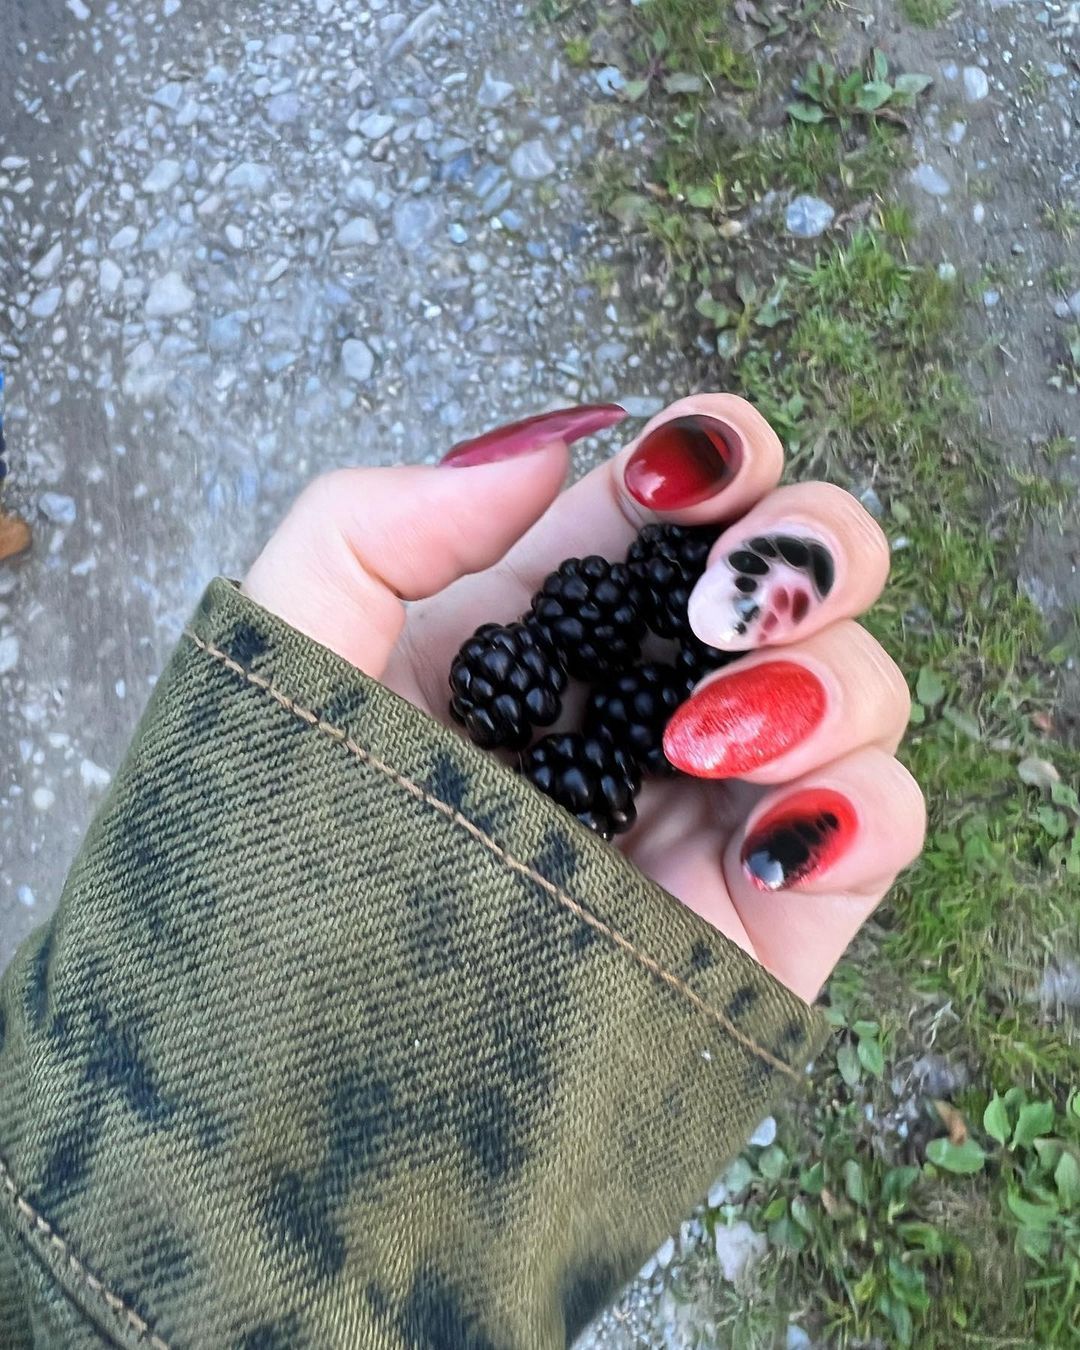 Blackberry nails u Emily Ratajkowski